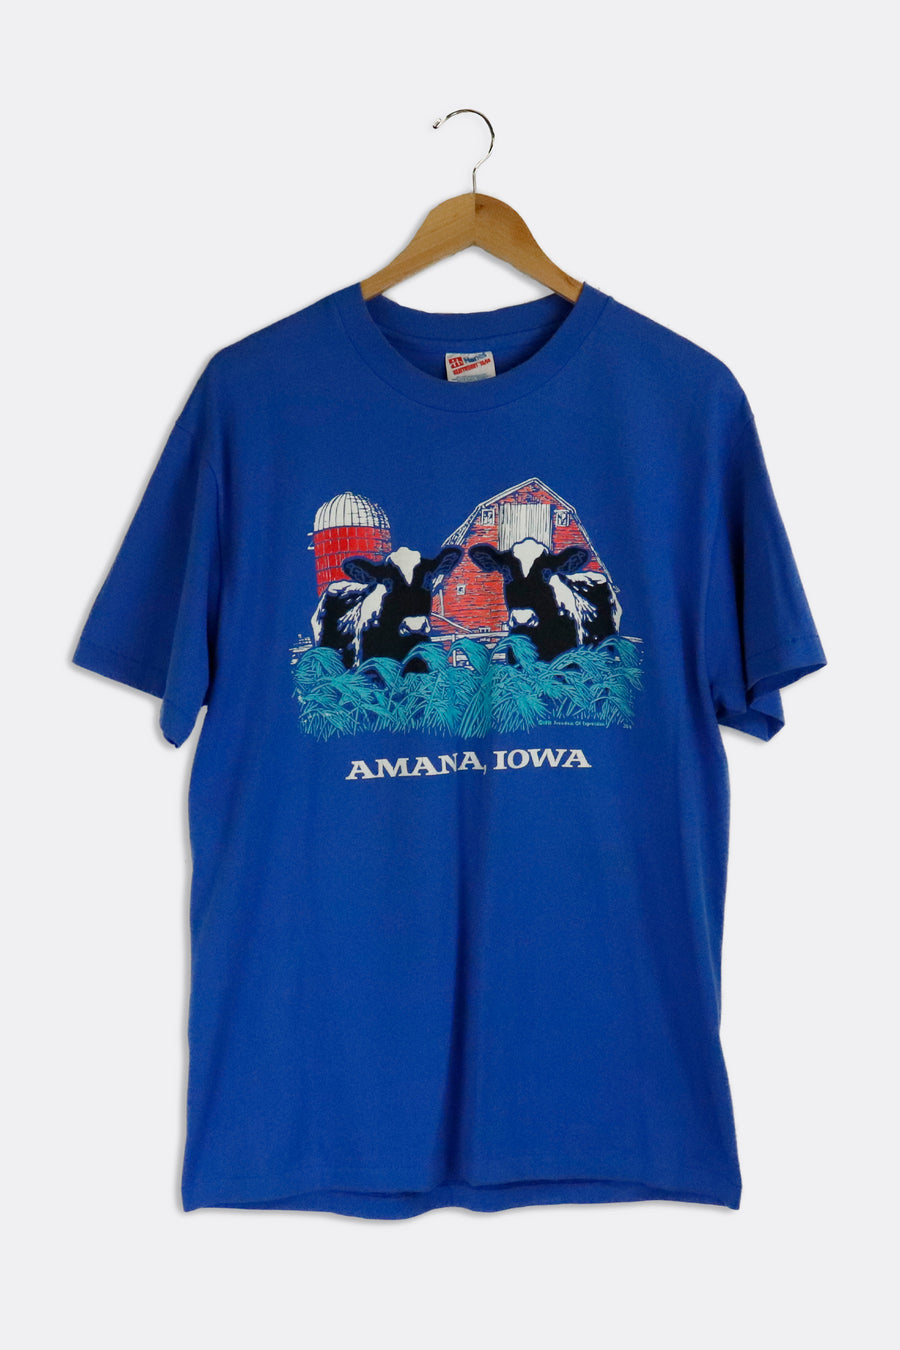 Vintage 1991 Amana Iowa T Shirt Sz L